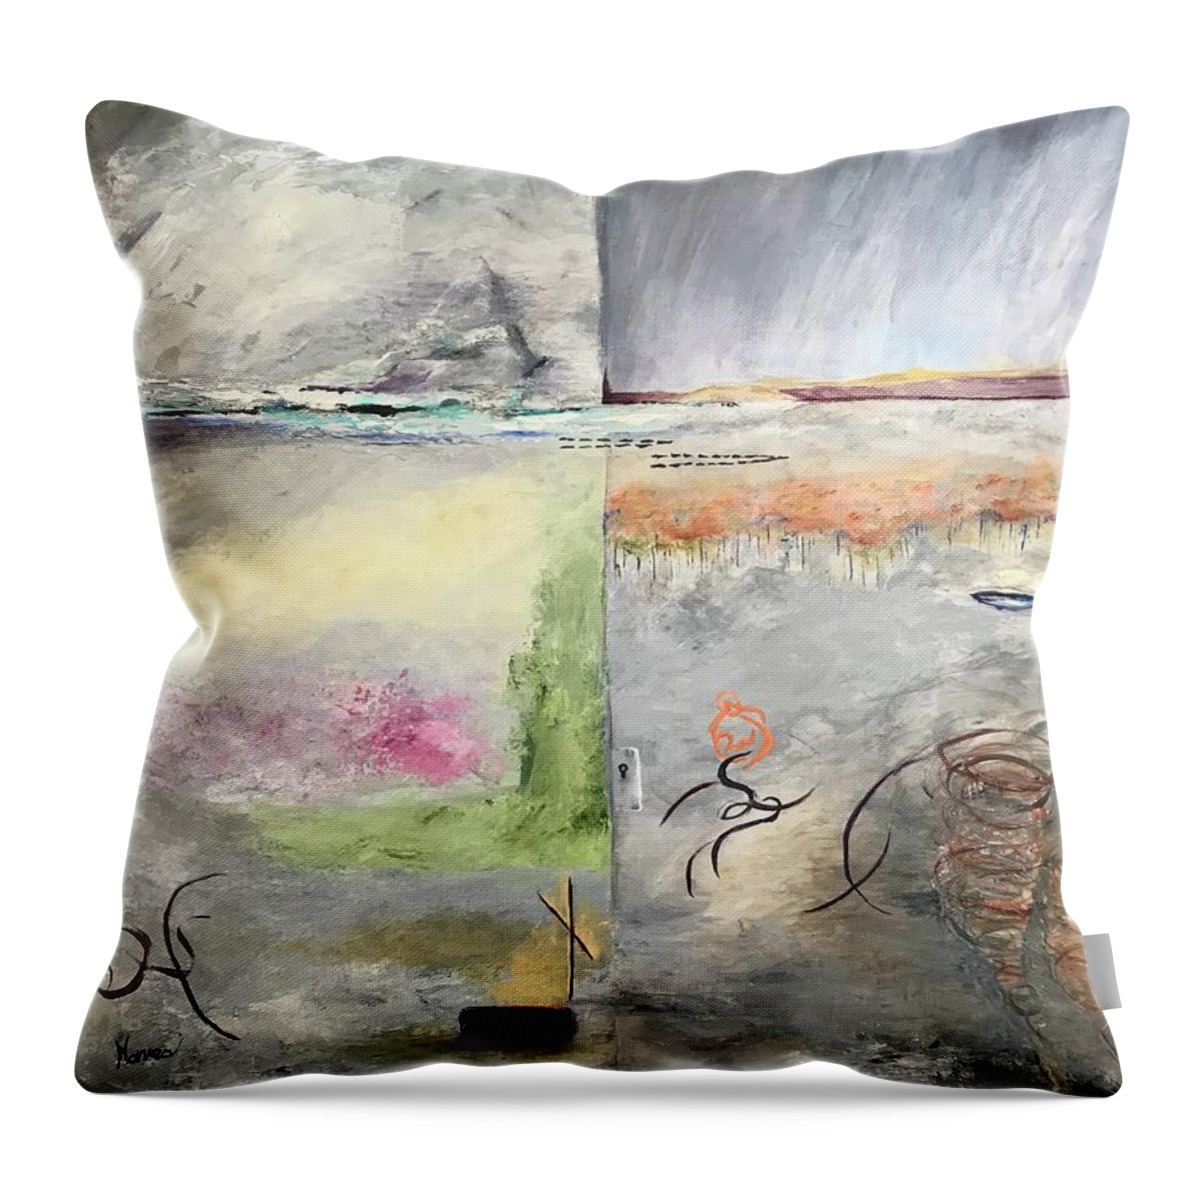 Seasons Throw Pillow featuring the painting Seasons by Deborah Naves